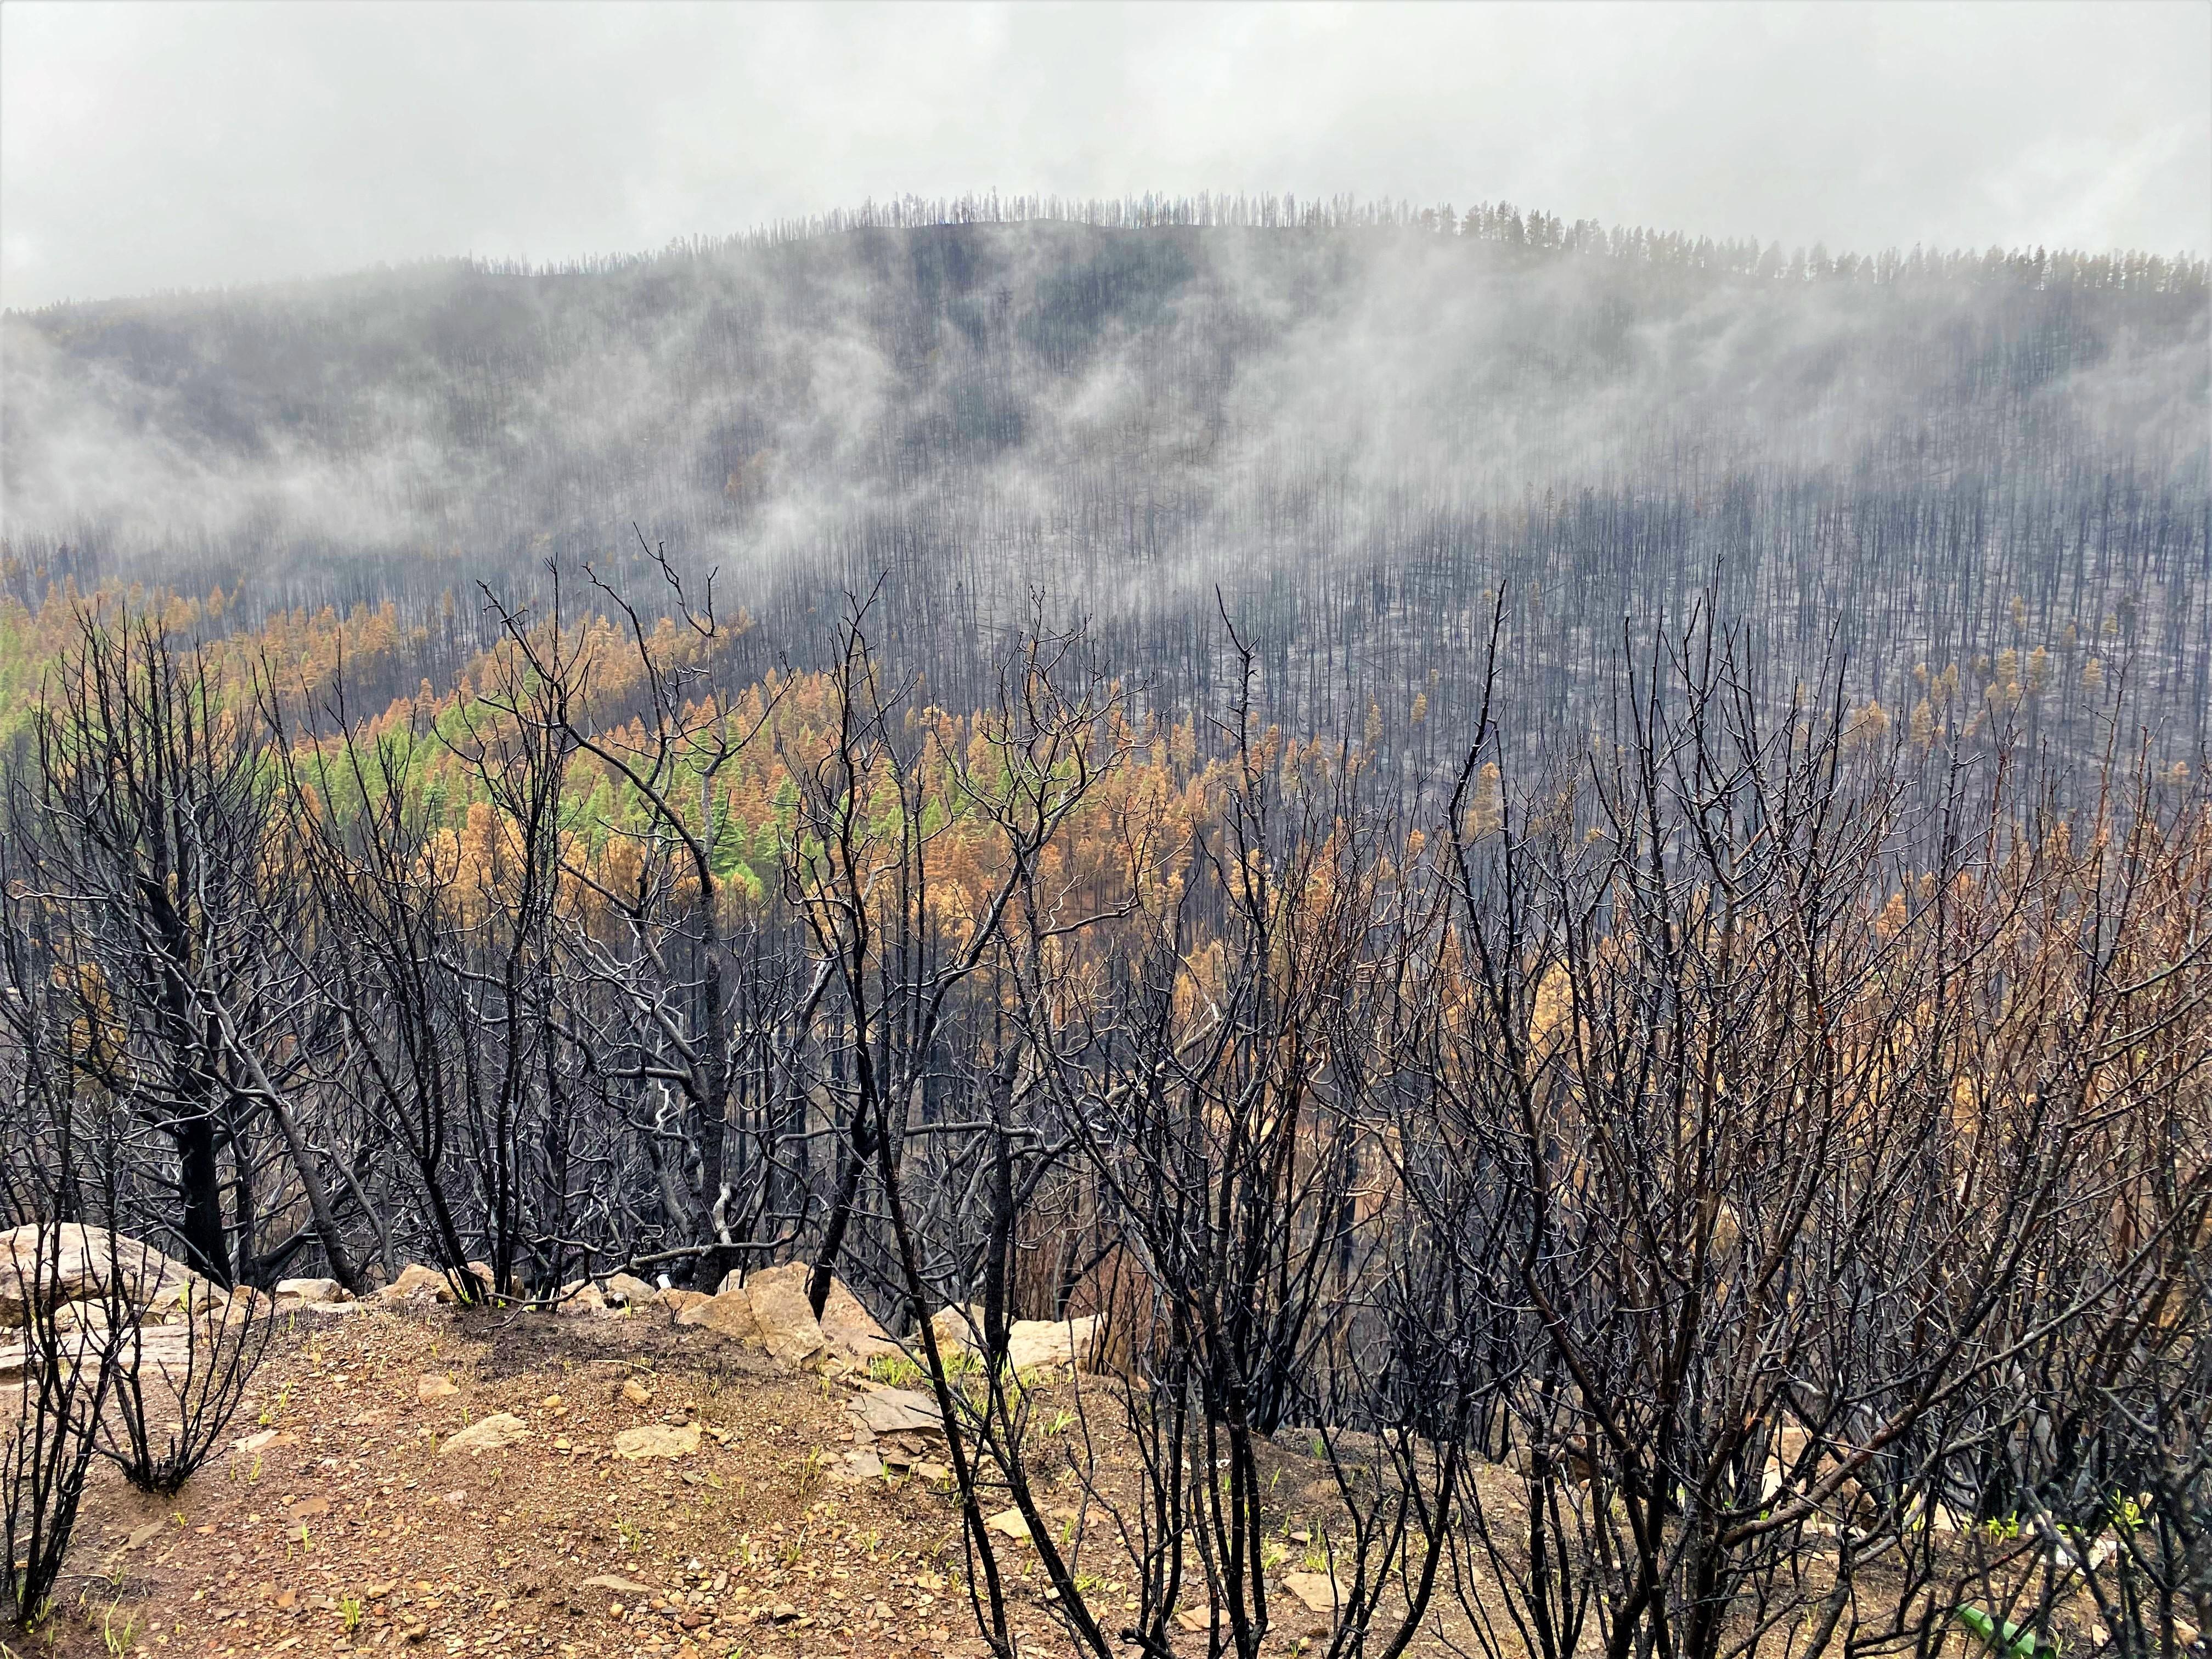 Higher intensity mosaic burn in Mora Valley off of NM Highway 518